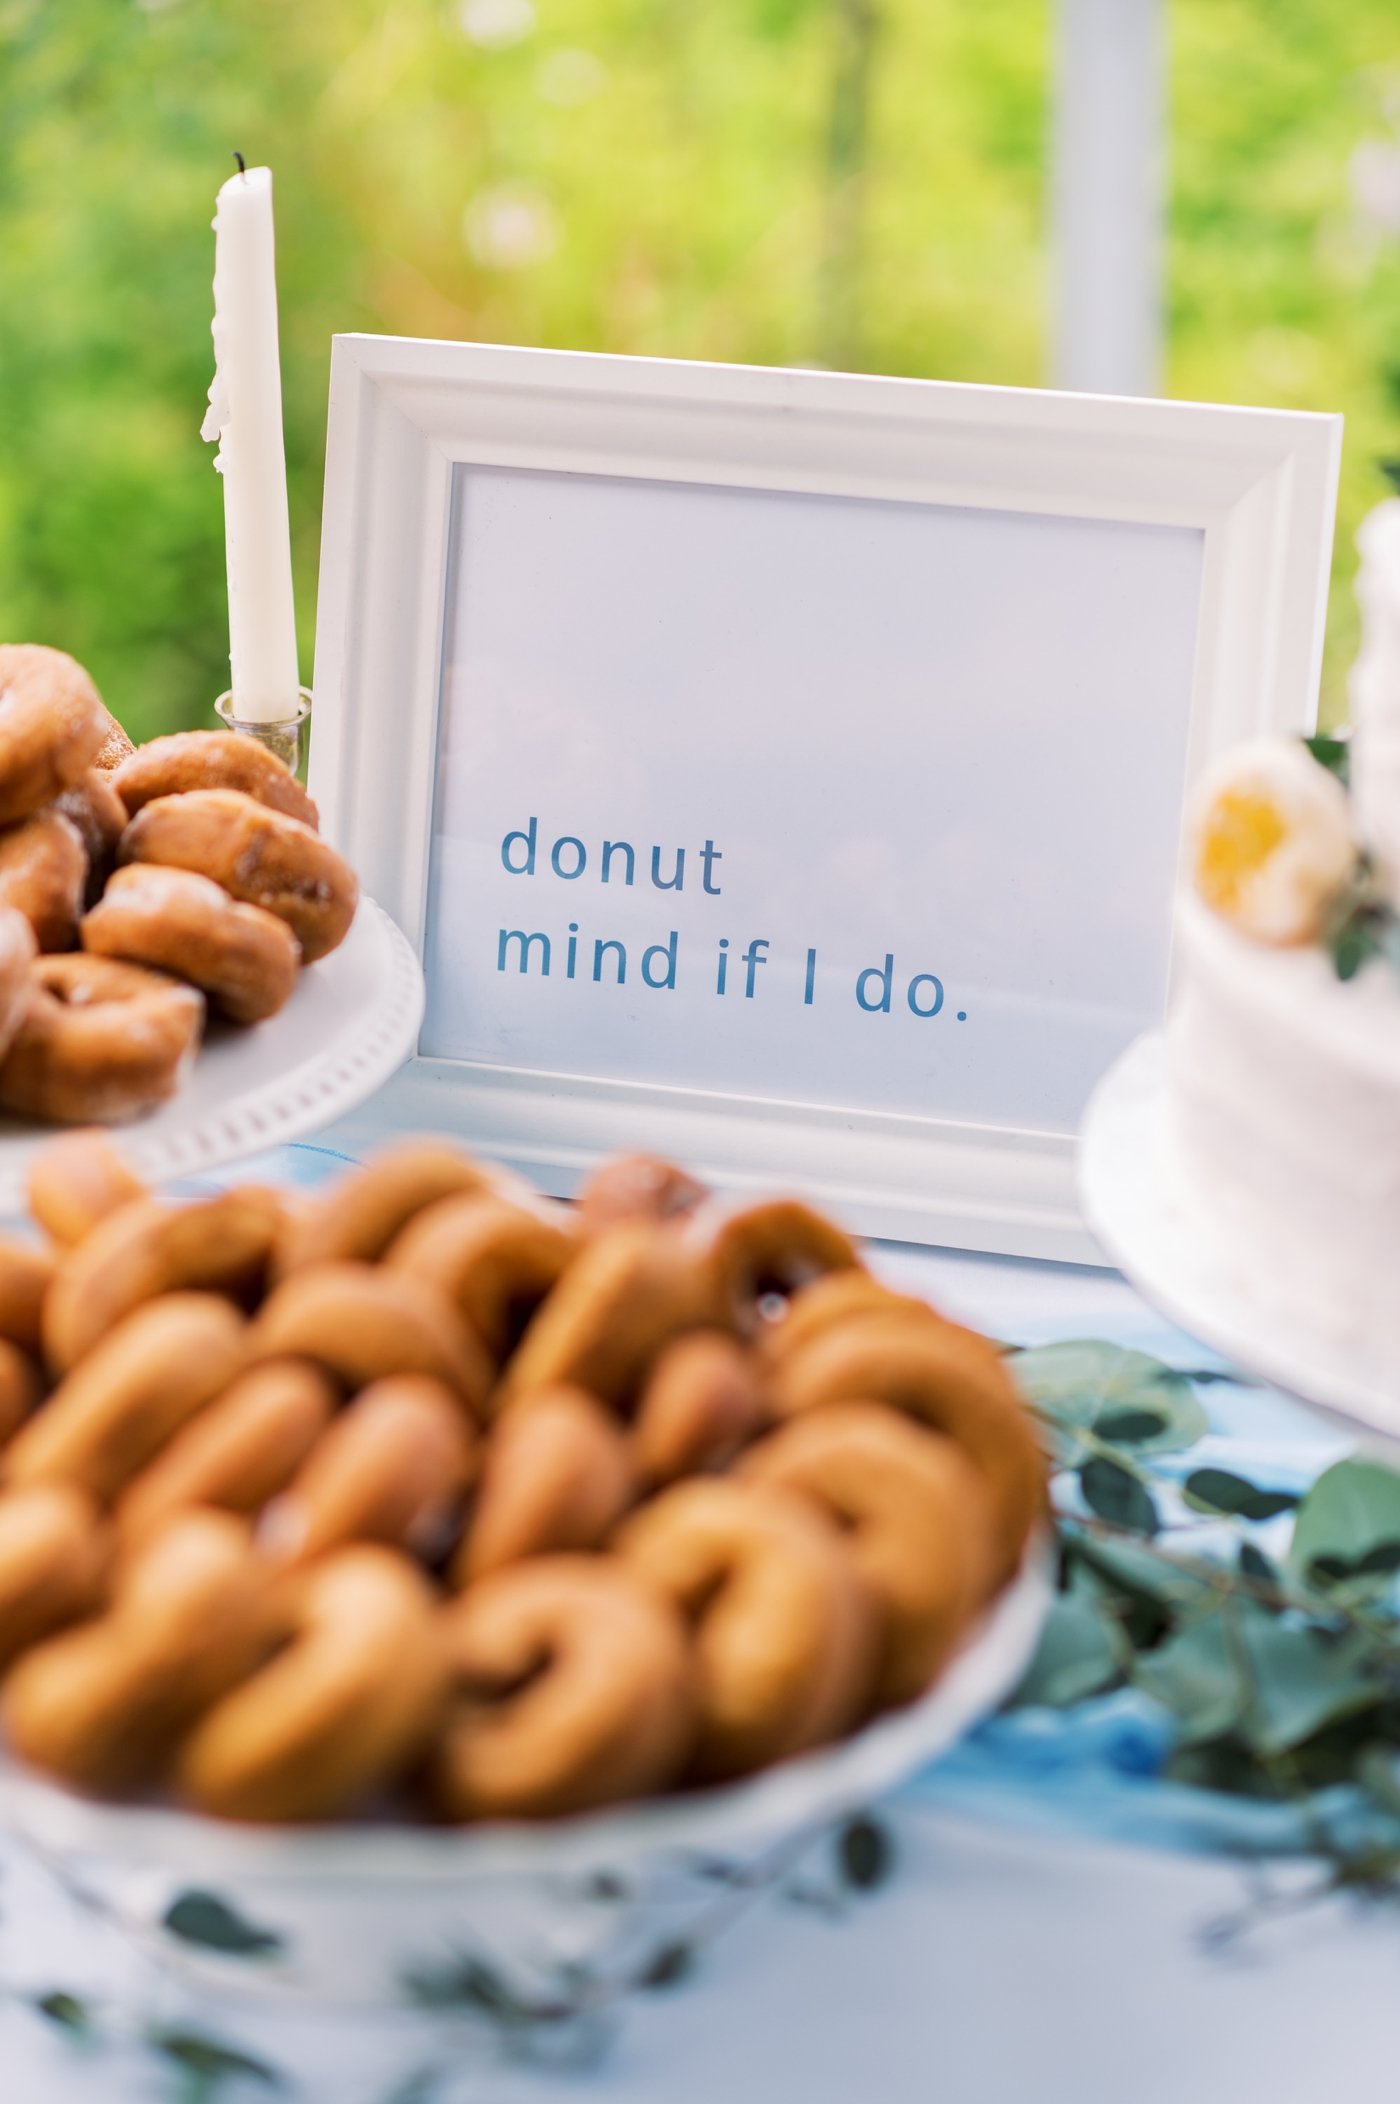 "Donut mind if I do" wedding dessert table sign